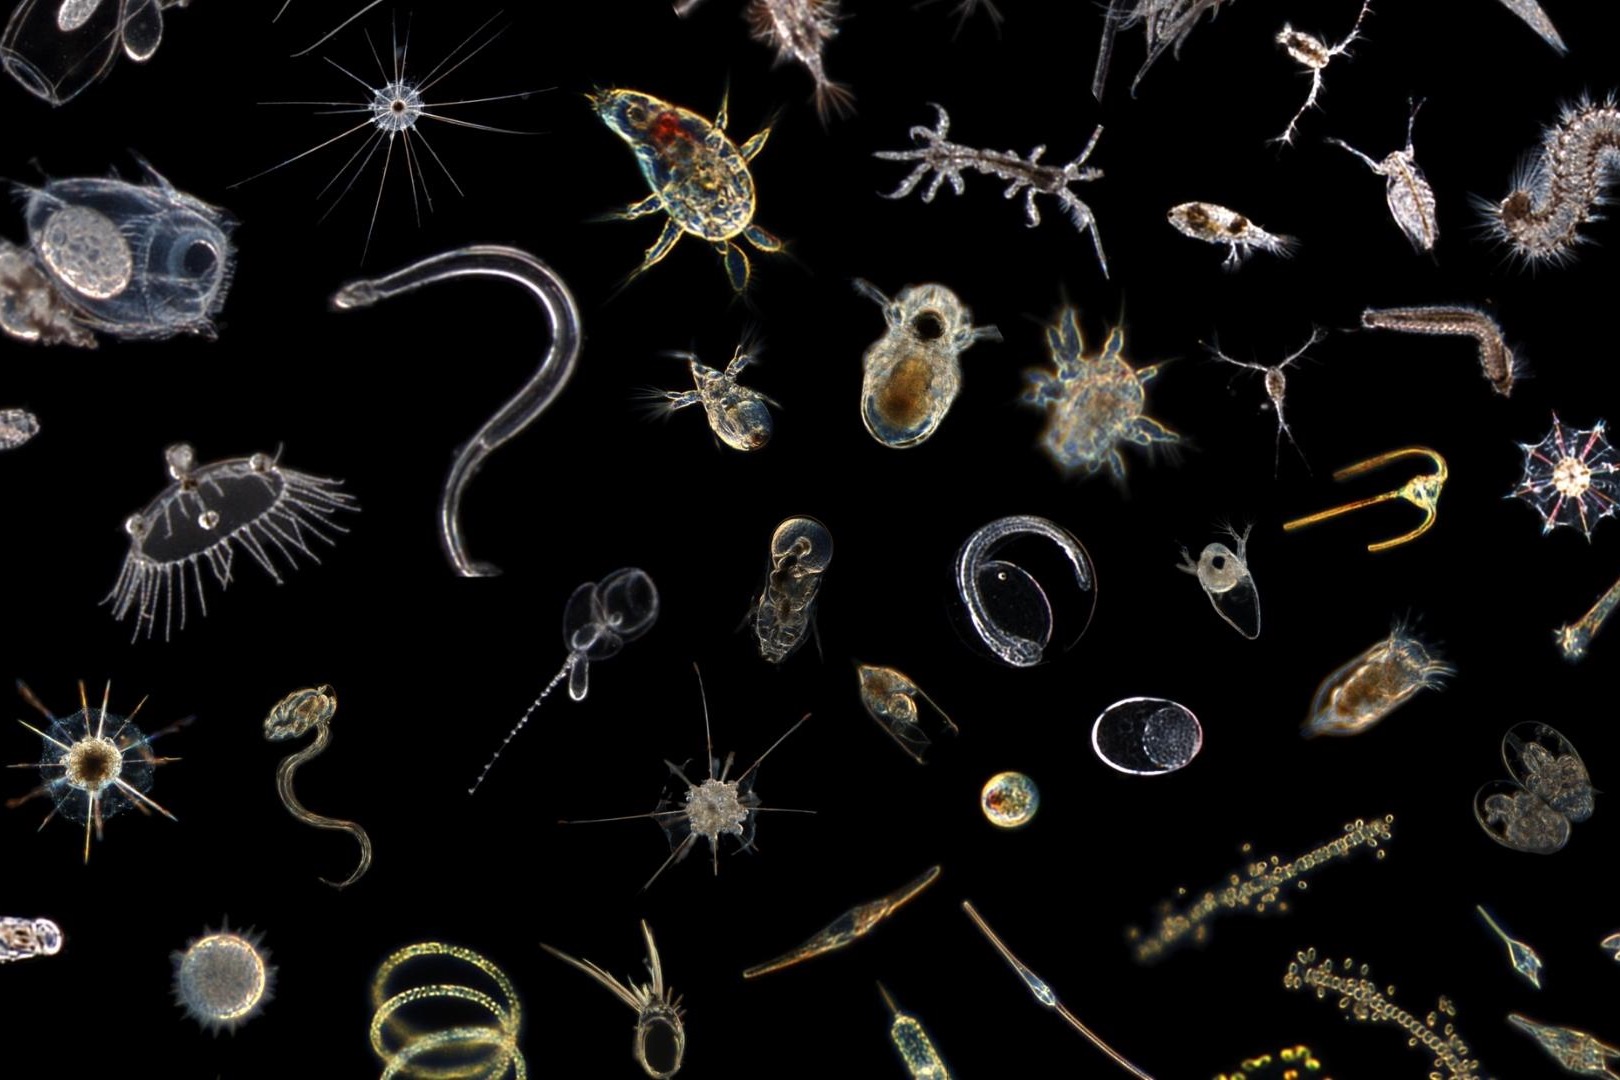 Drifting World through the Scripps Plankton Camera